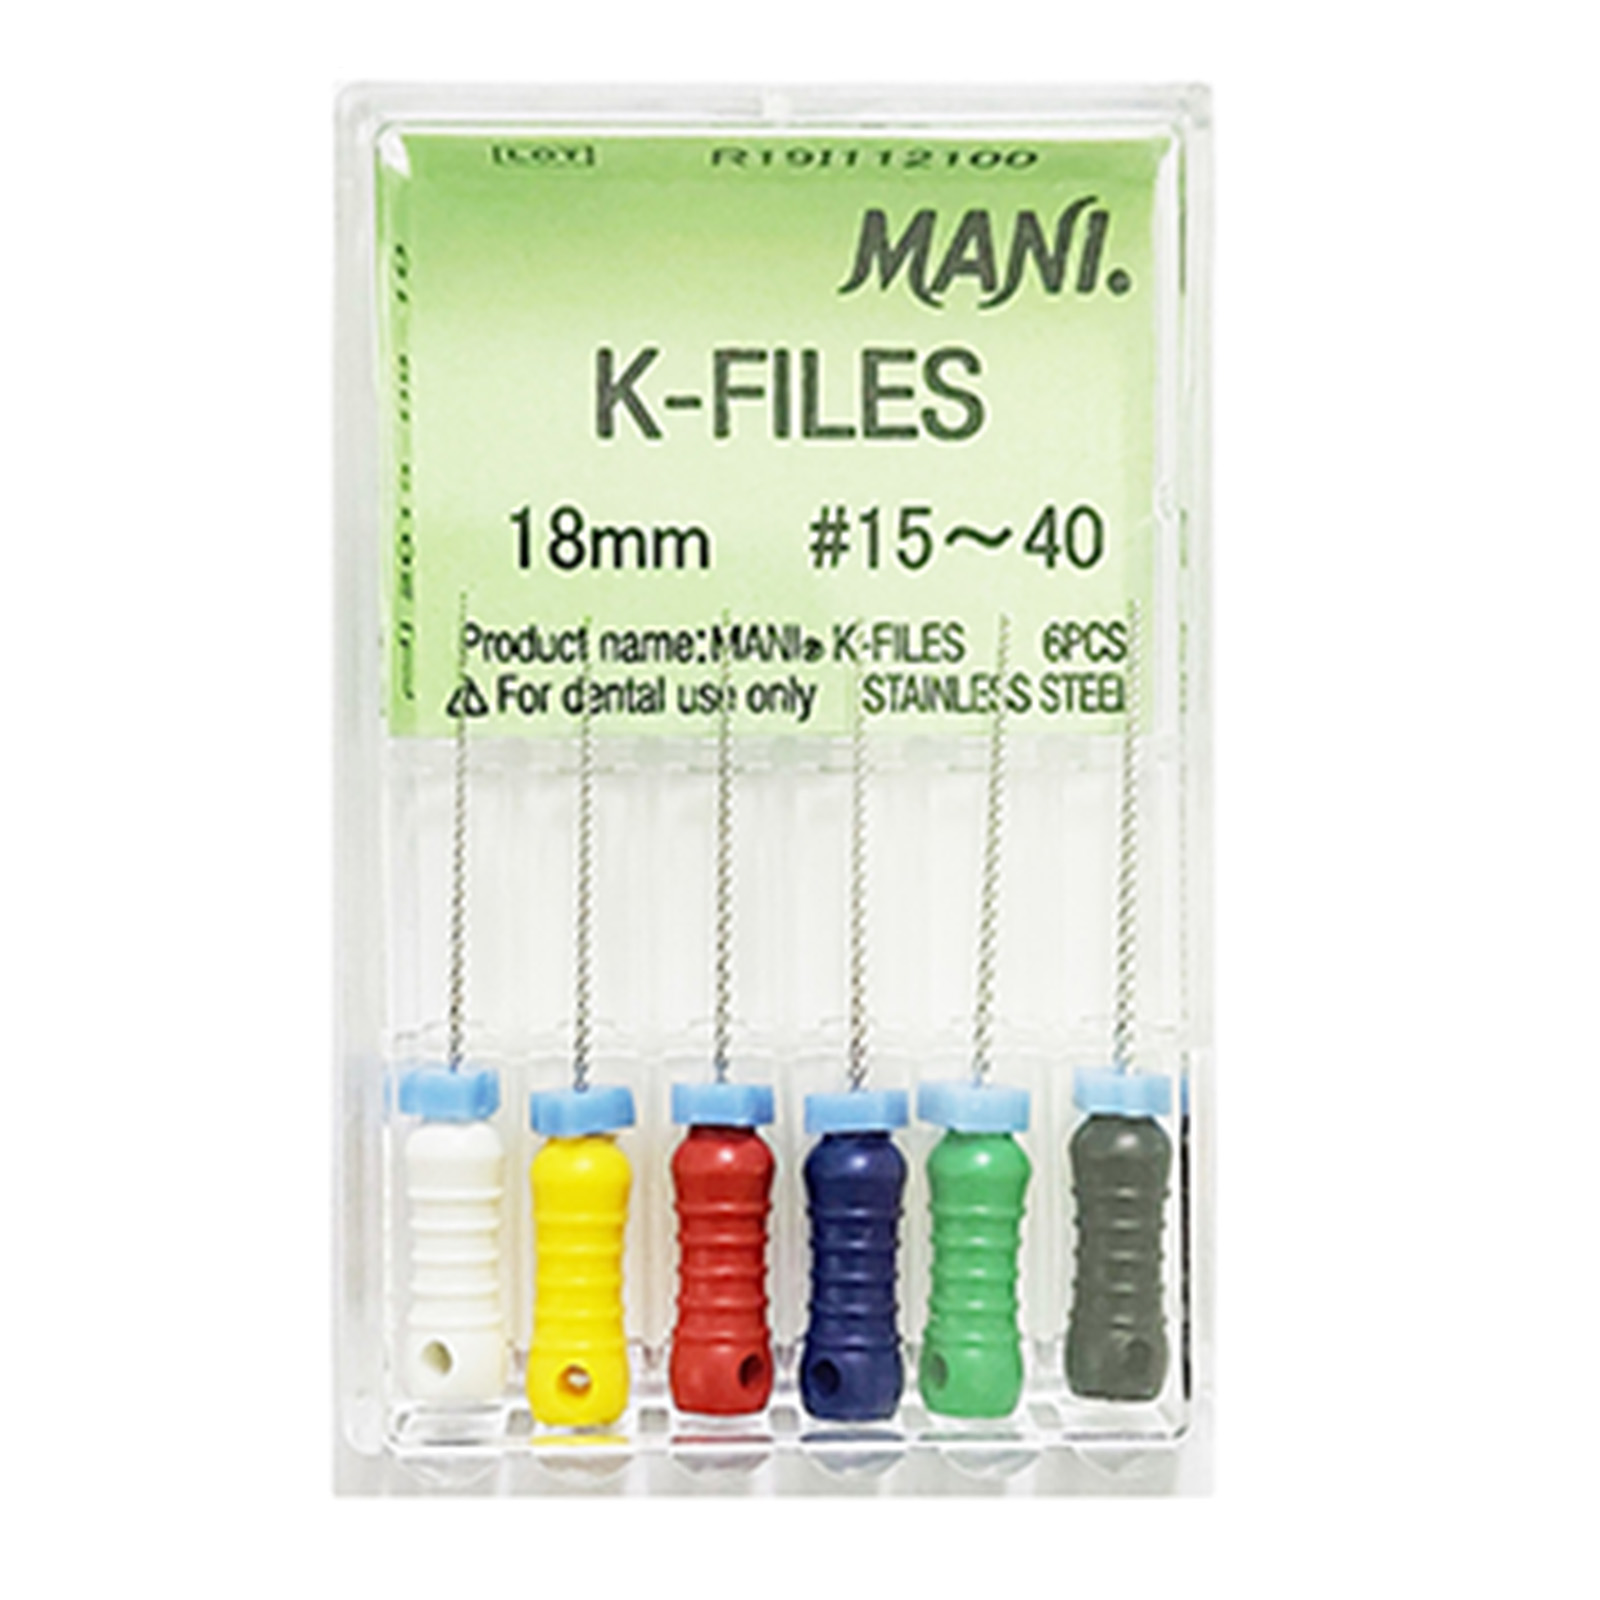 Mani K Files 18mm #30 Dental Endo